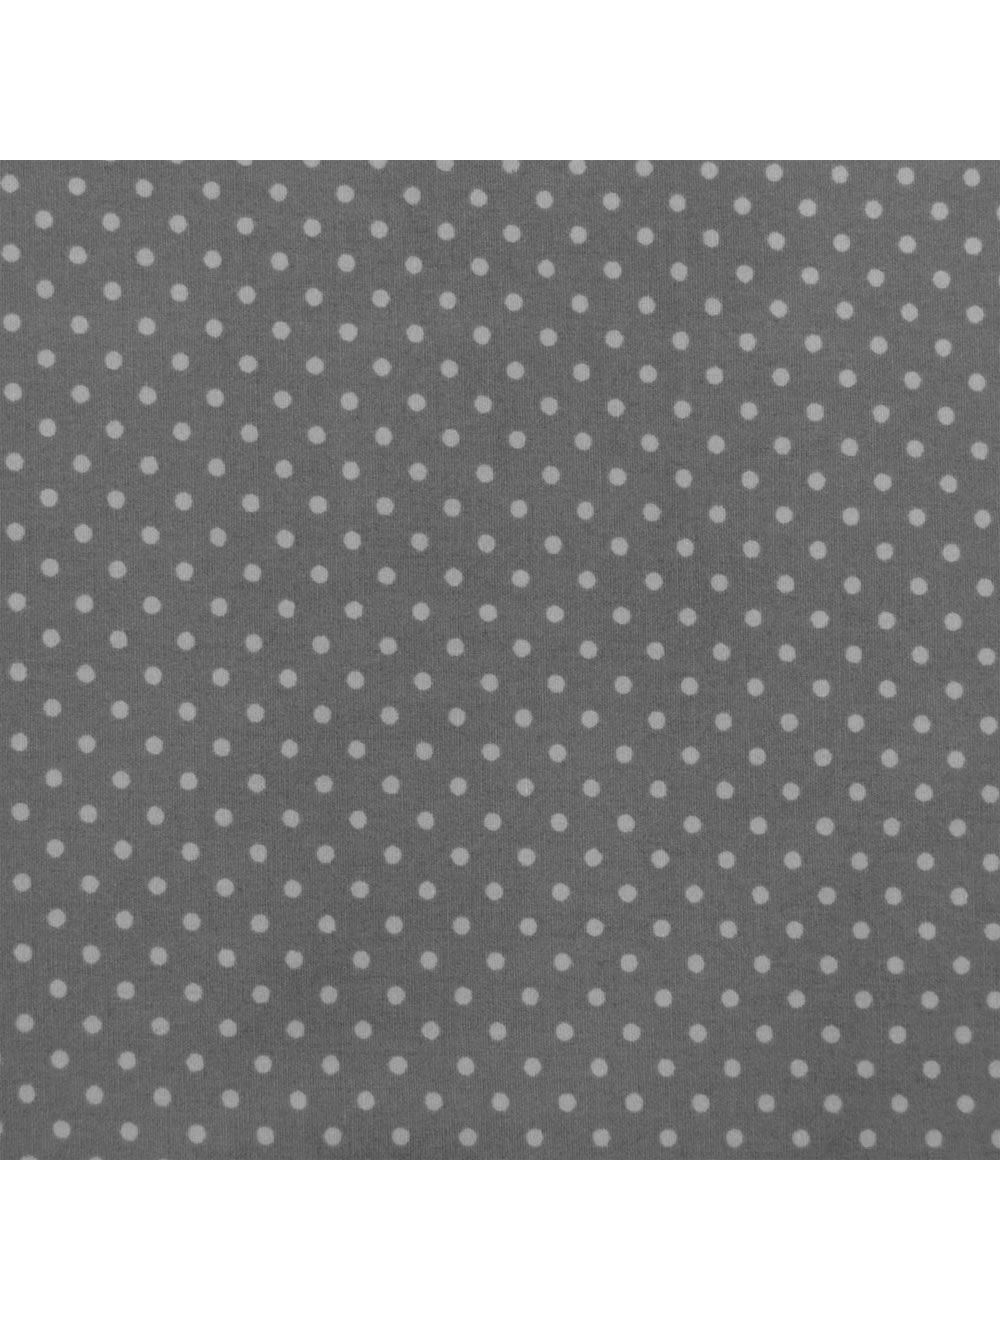 White on Grey Polka Dot 3mm Fabric | Cotton Fabric | Calico Laine